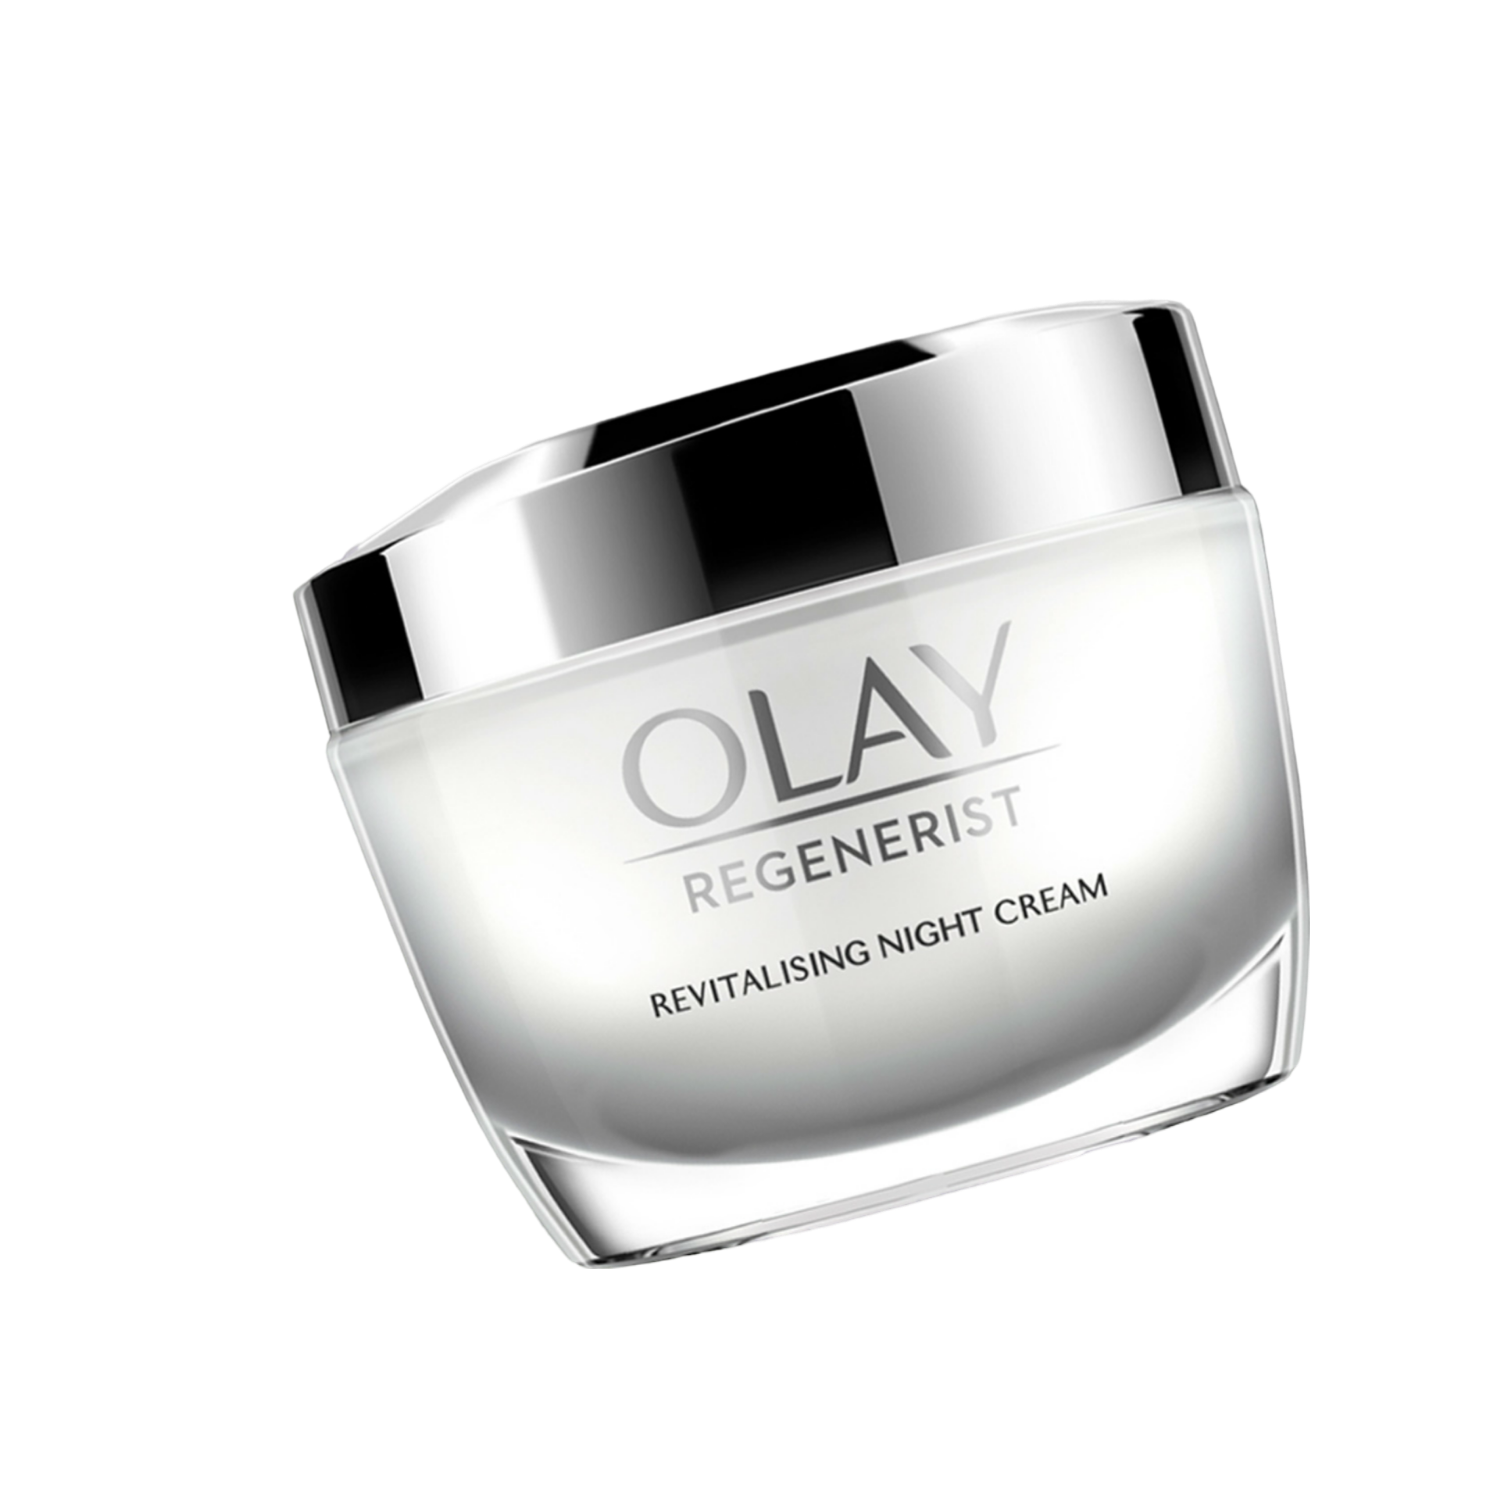 Olay Night Cream: Regenerist Revitalising Night Moisturiser - 50g